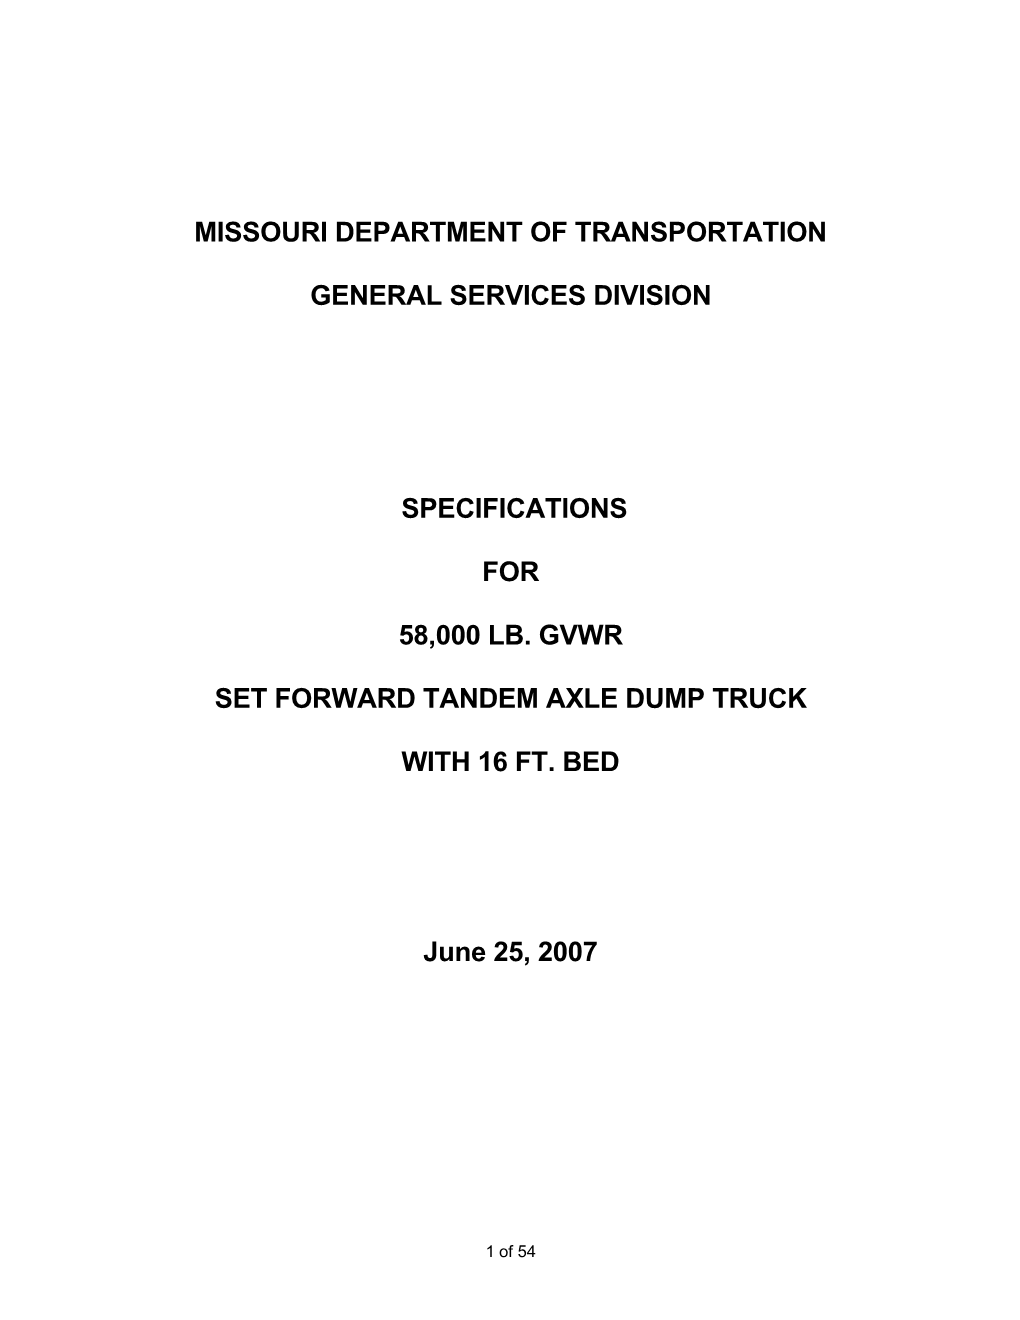 Missouri Department of Transportation s1